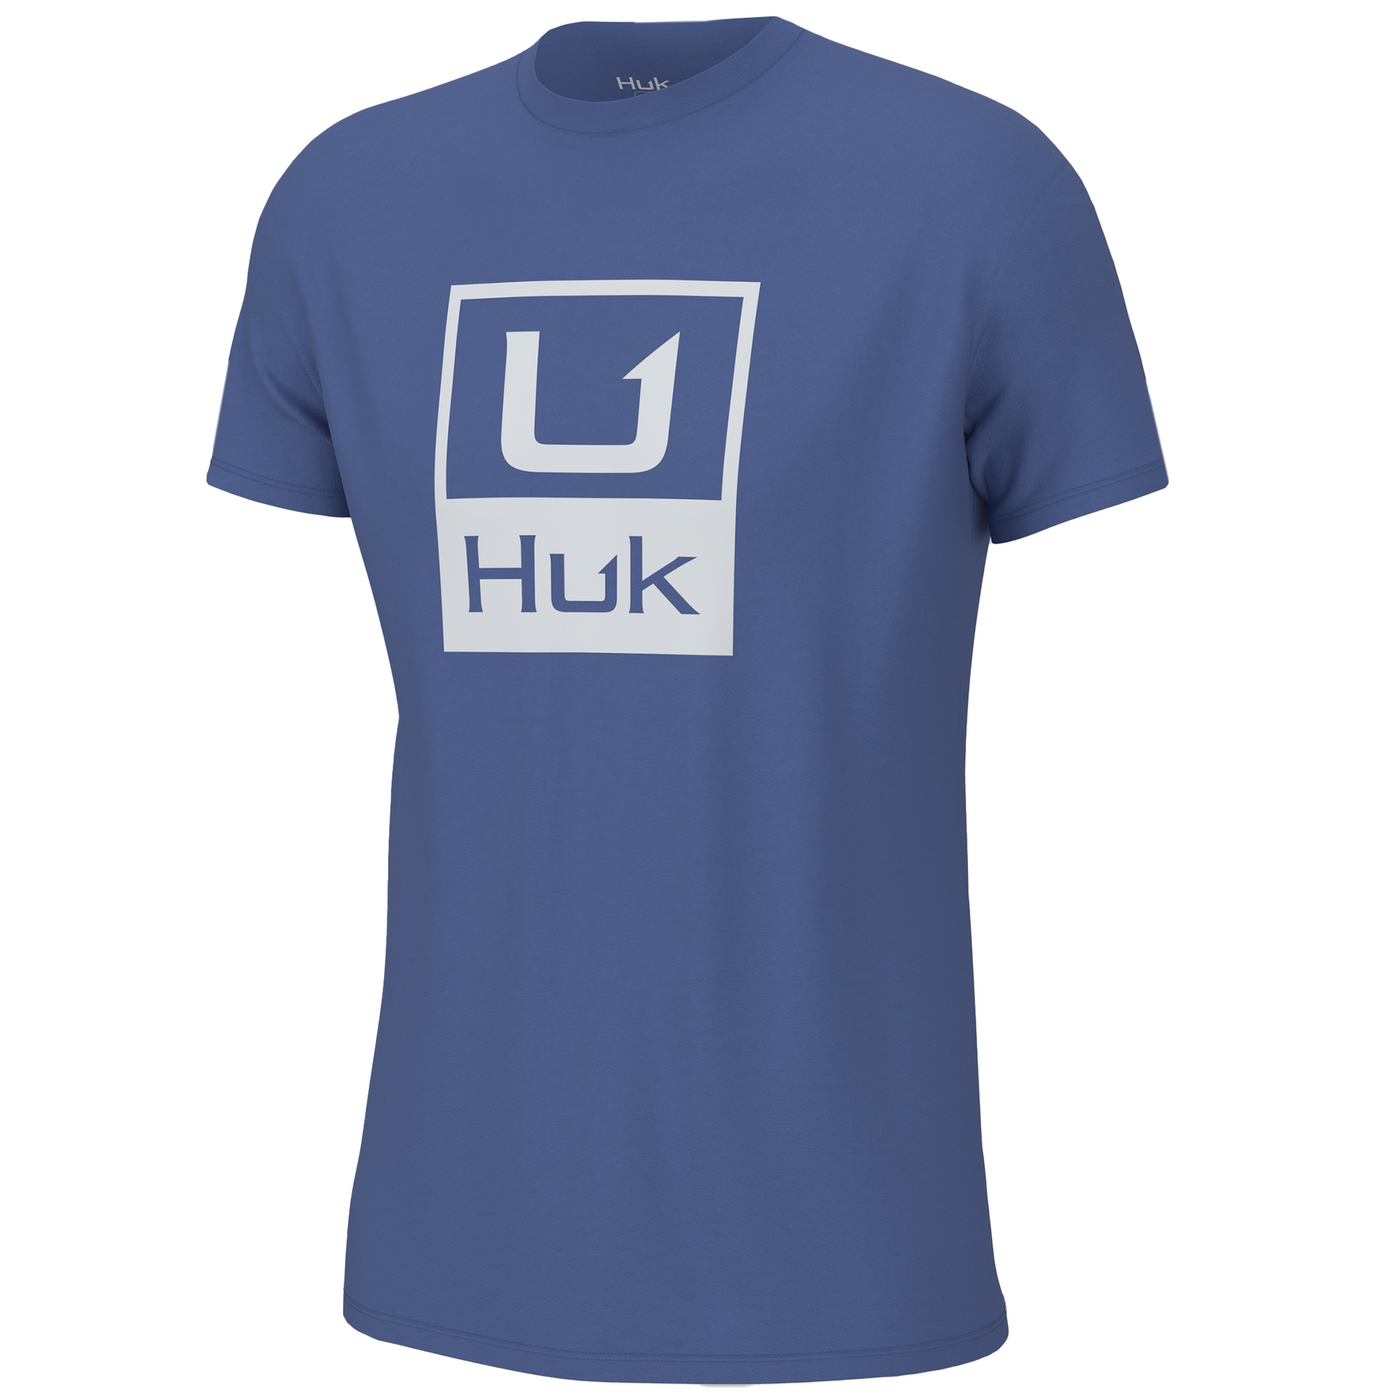 Huk Kids Huk'D Up Logo Tee